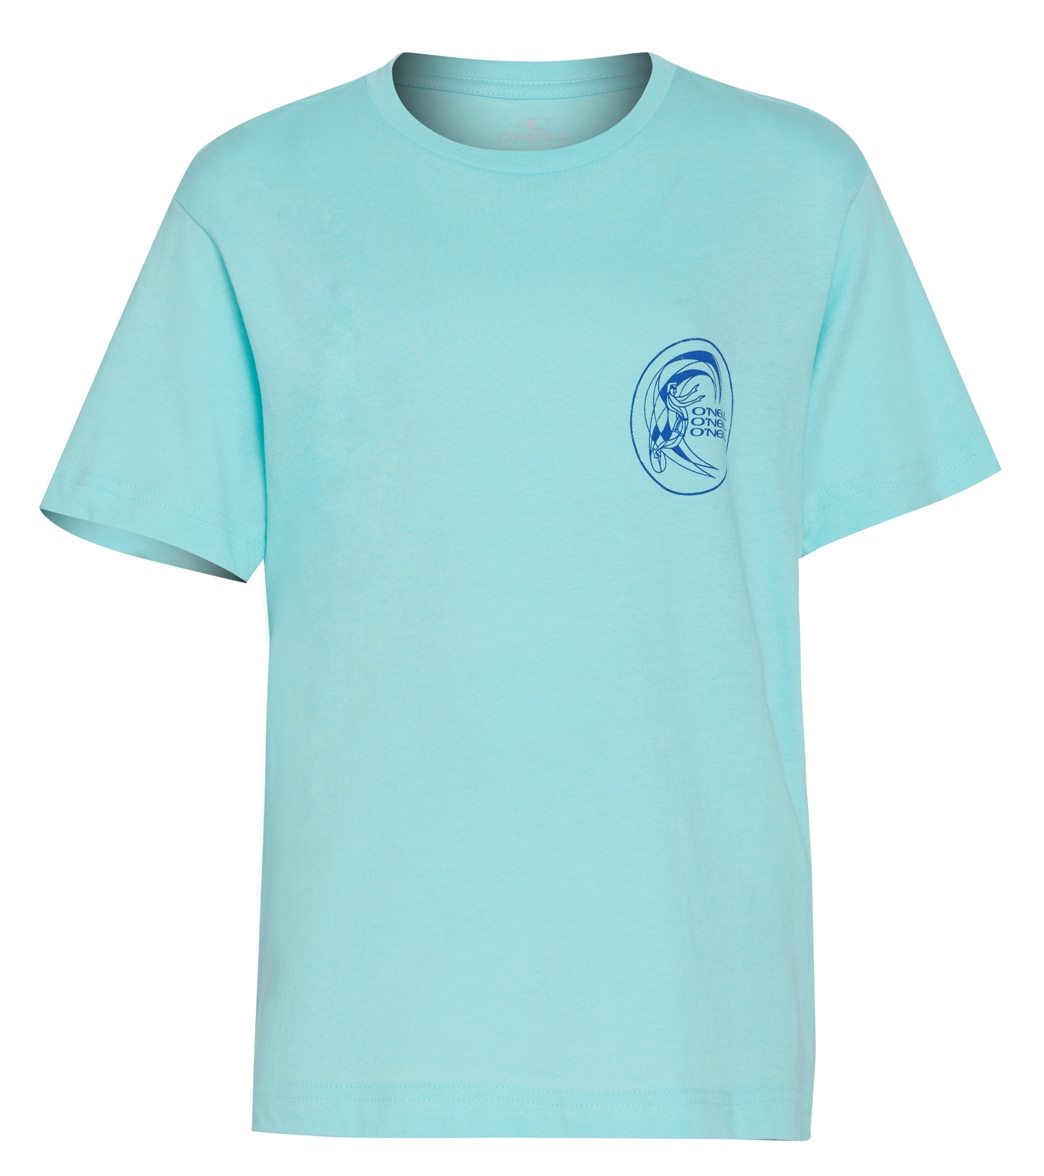 O'neill Boys' Jam Tee Big Kid Shirt - Turquoise Large Cotton - Swimoutlet.com